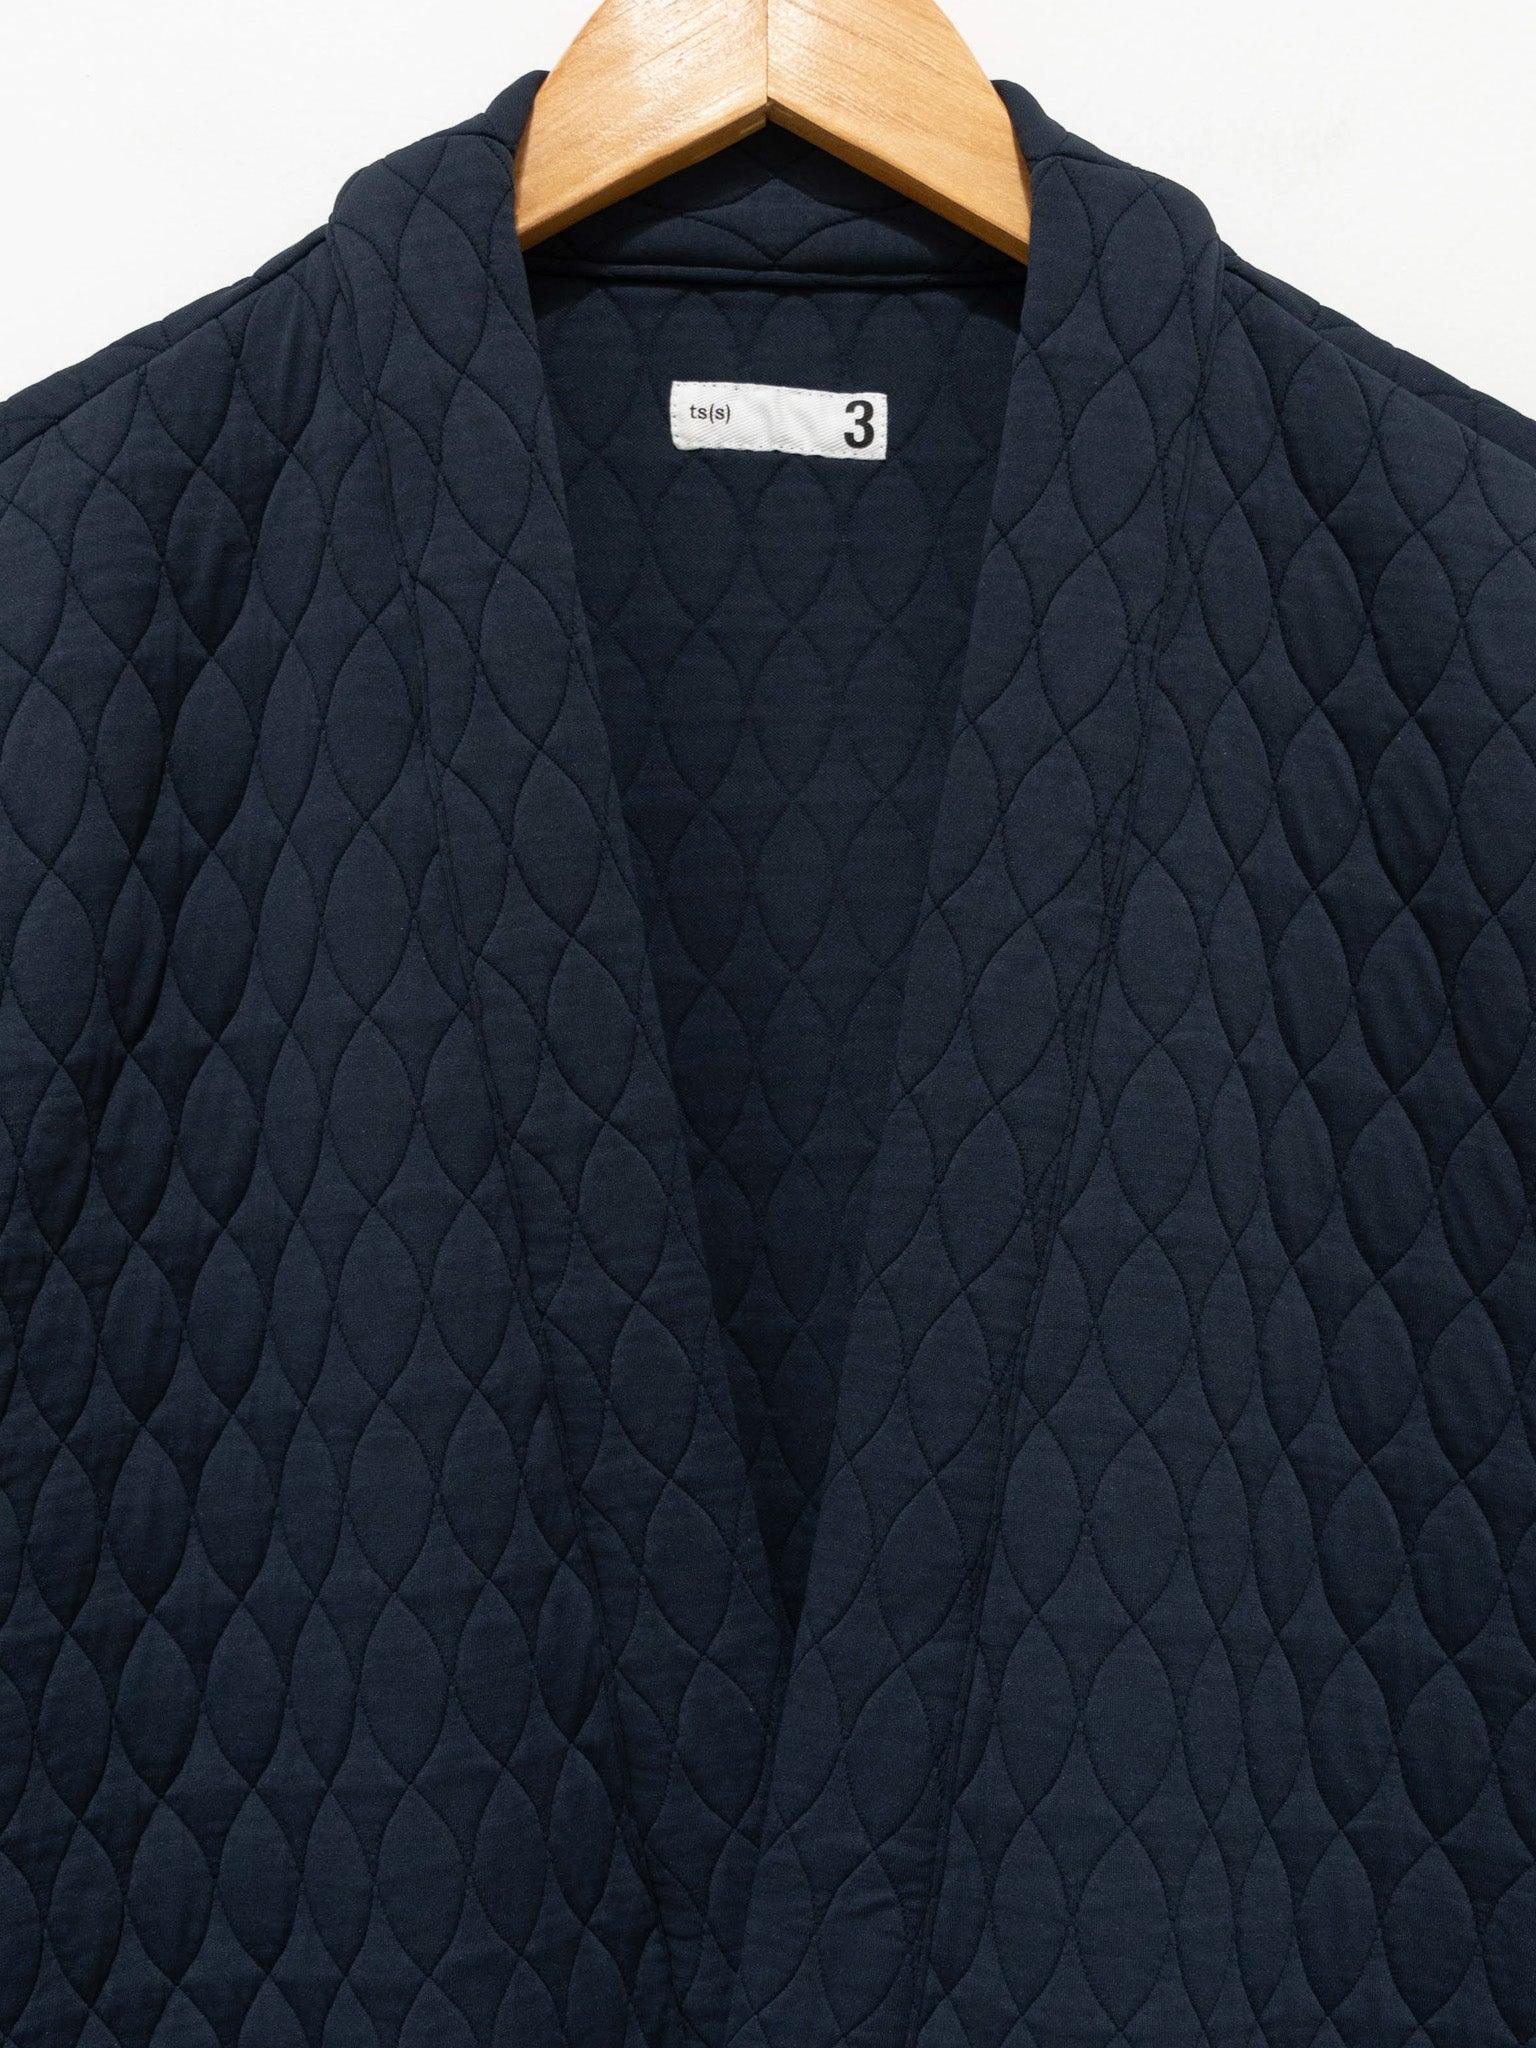 Namu Shop - ts(s) Poly Quilt Jacquard Jersey Easy Cardigan - Navy